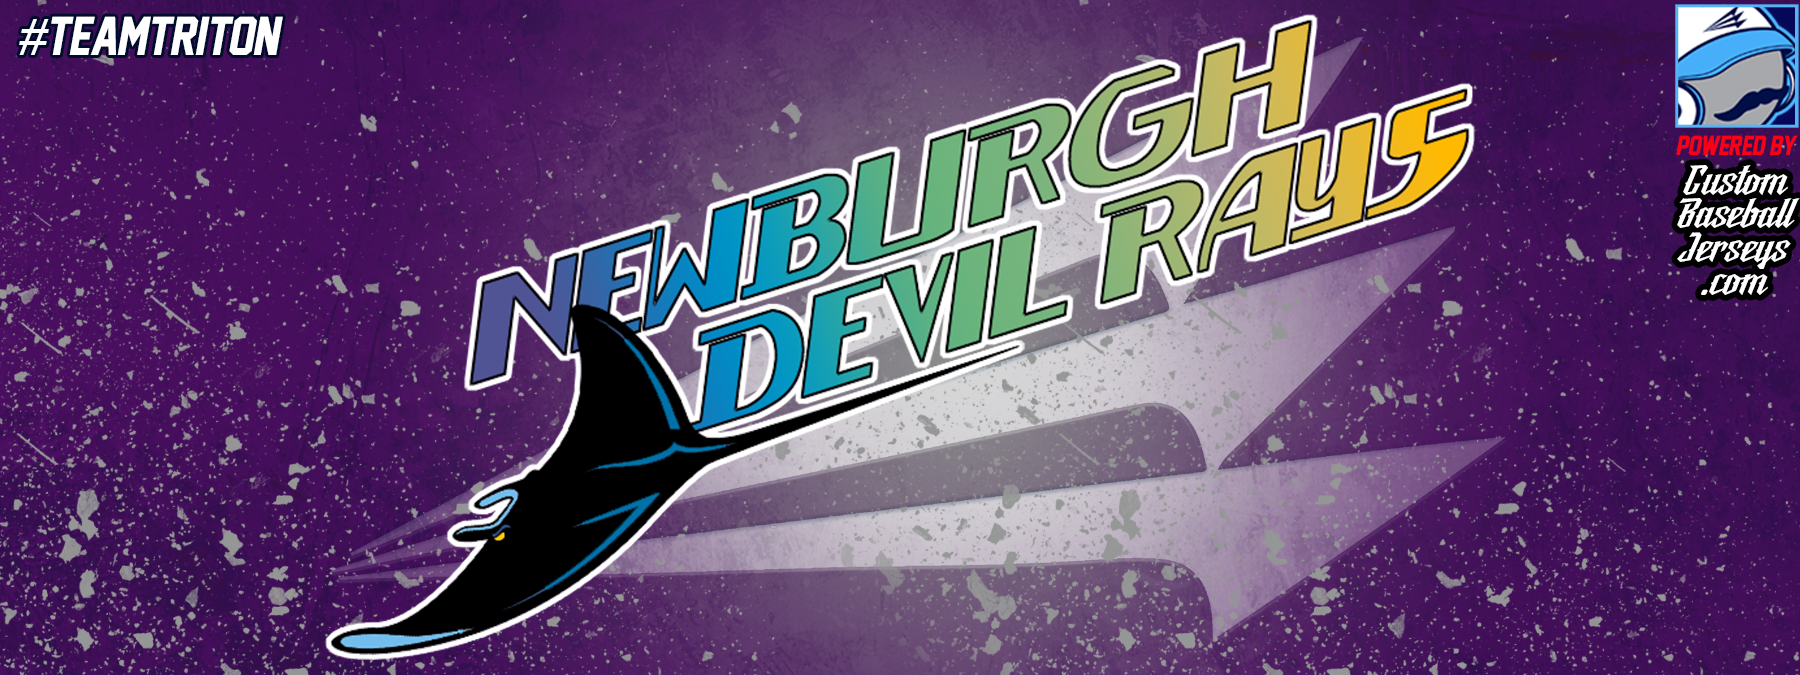 Newburgh Devil Rays Custom NanoDri Baseball Jersey #J3b